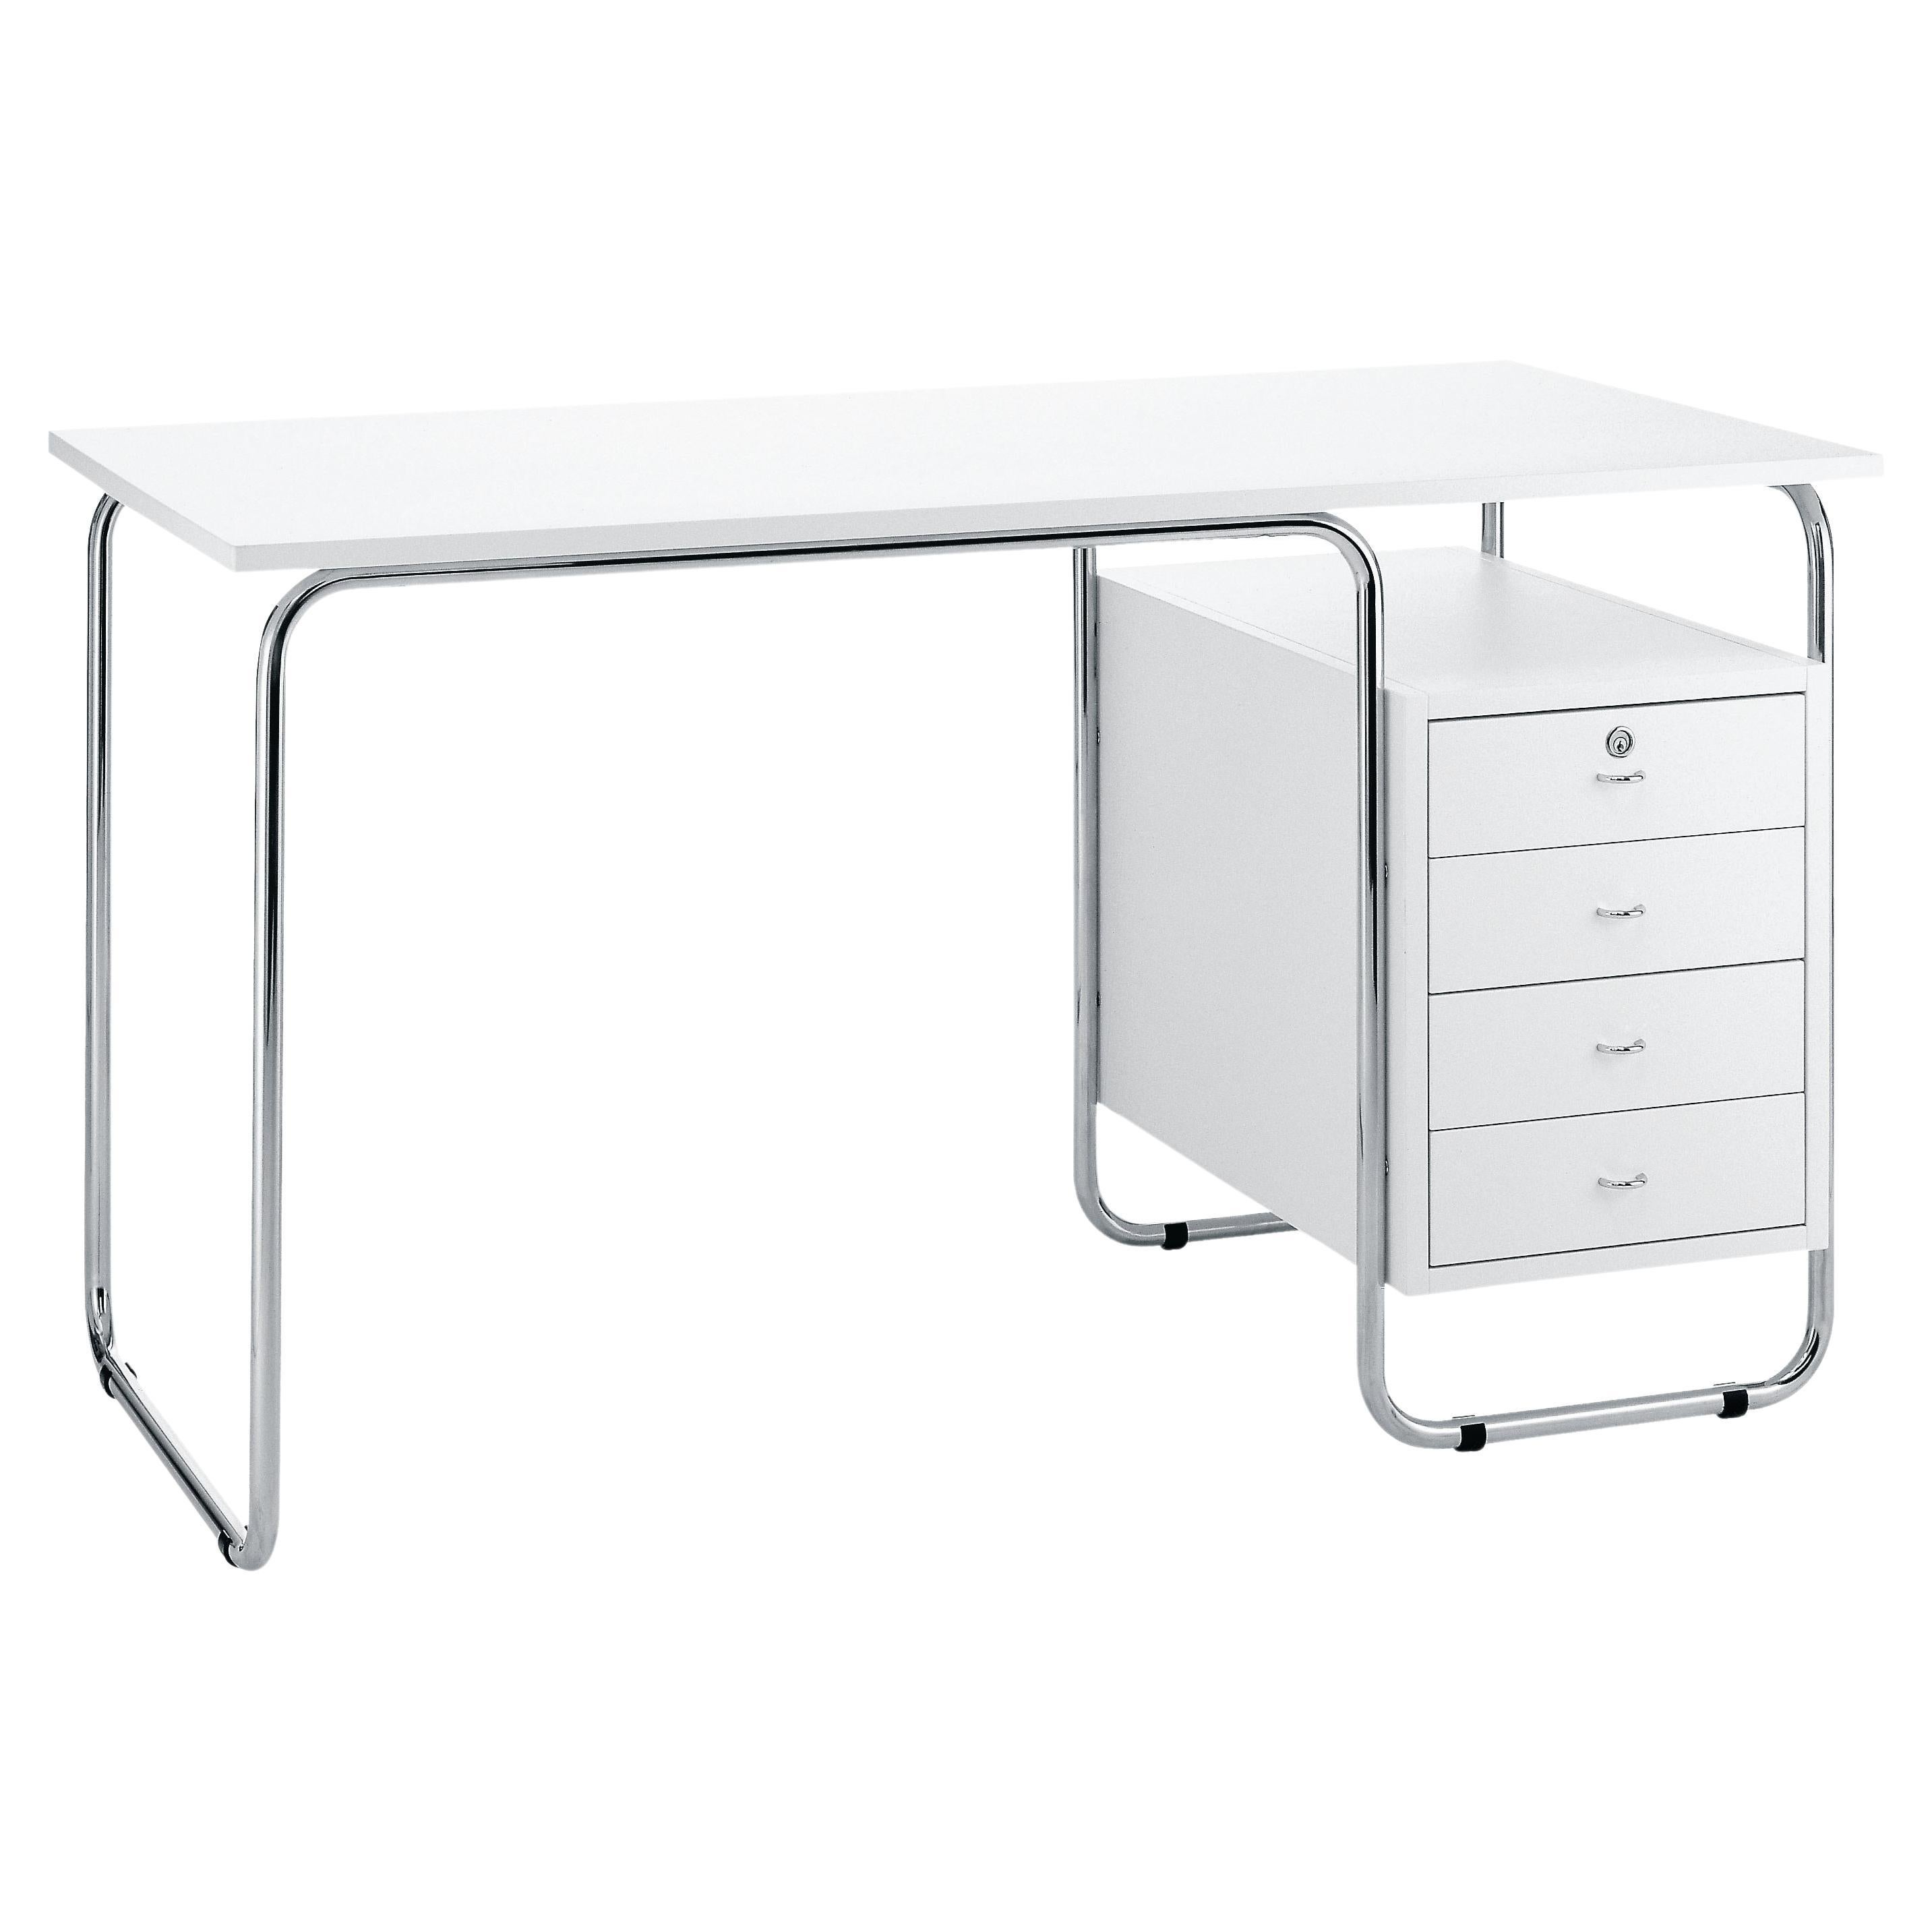 Zanotta Comacina Writing Desk in White Top & Stainless Steel Frame,Piero Bottoni